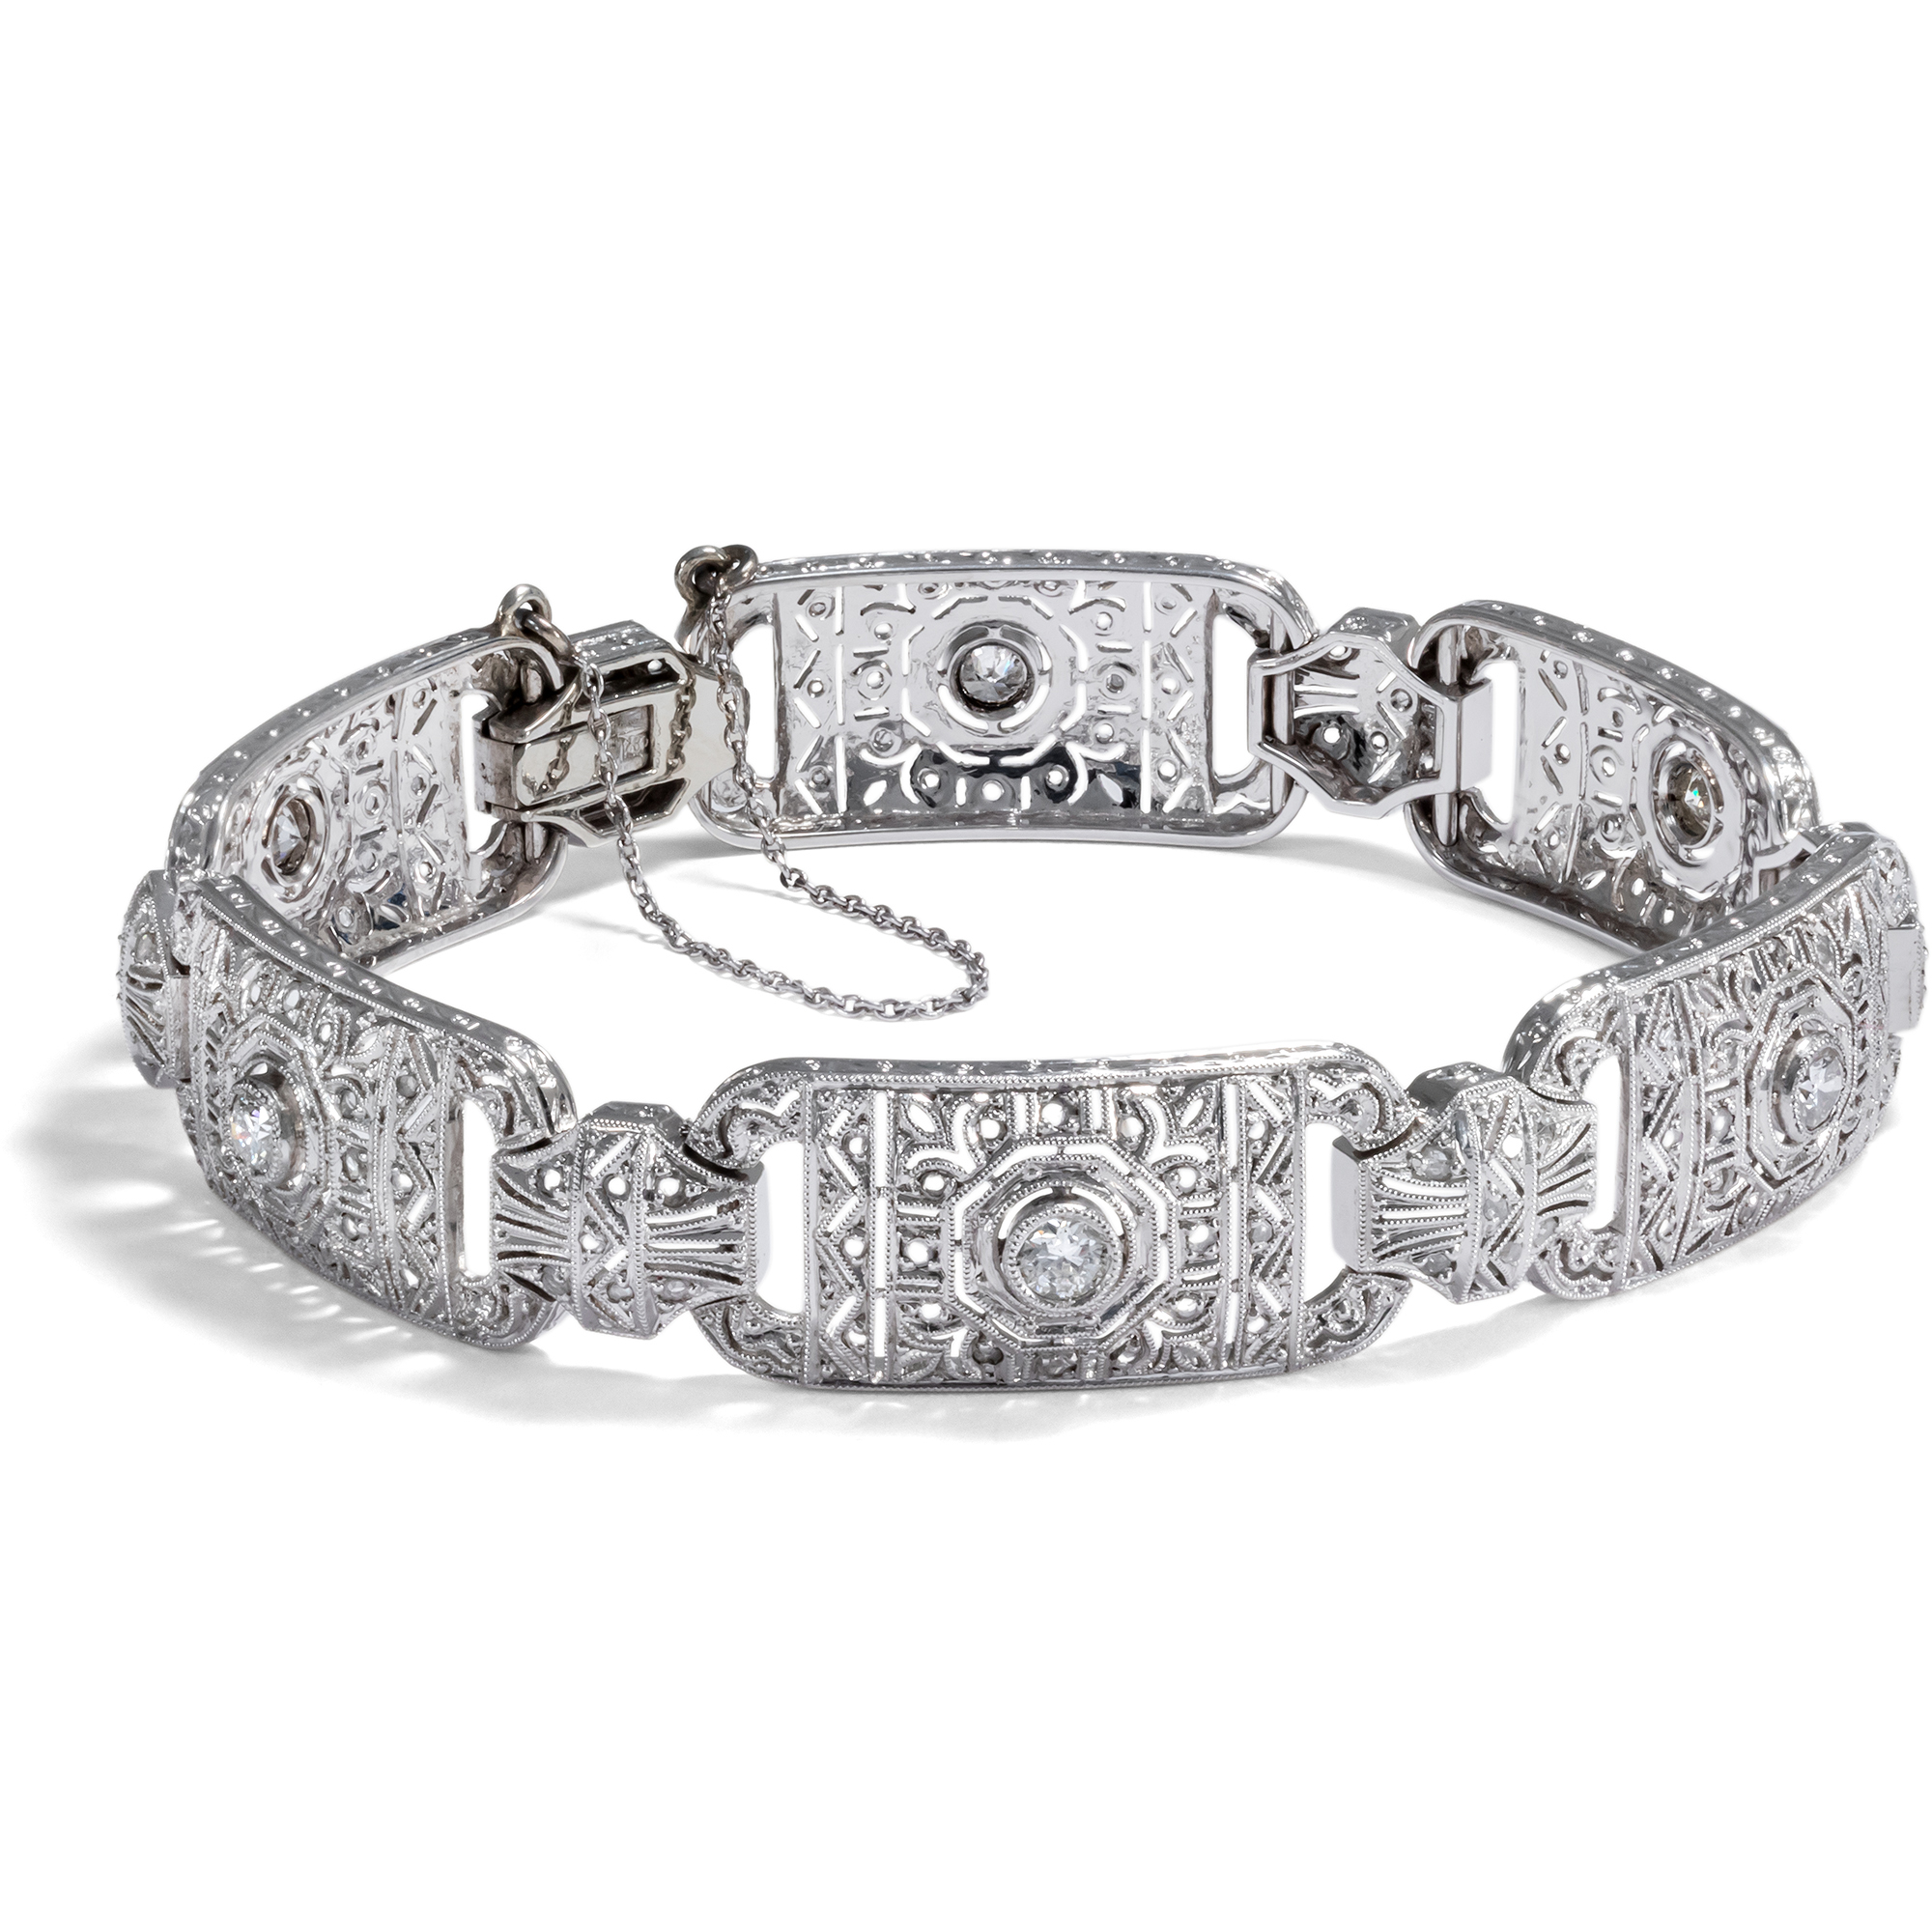 Enchanting Art Deco Diamond Bracelet